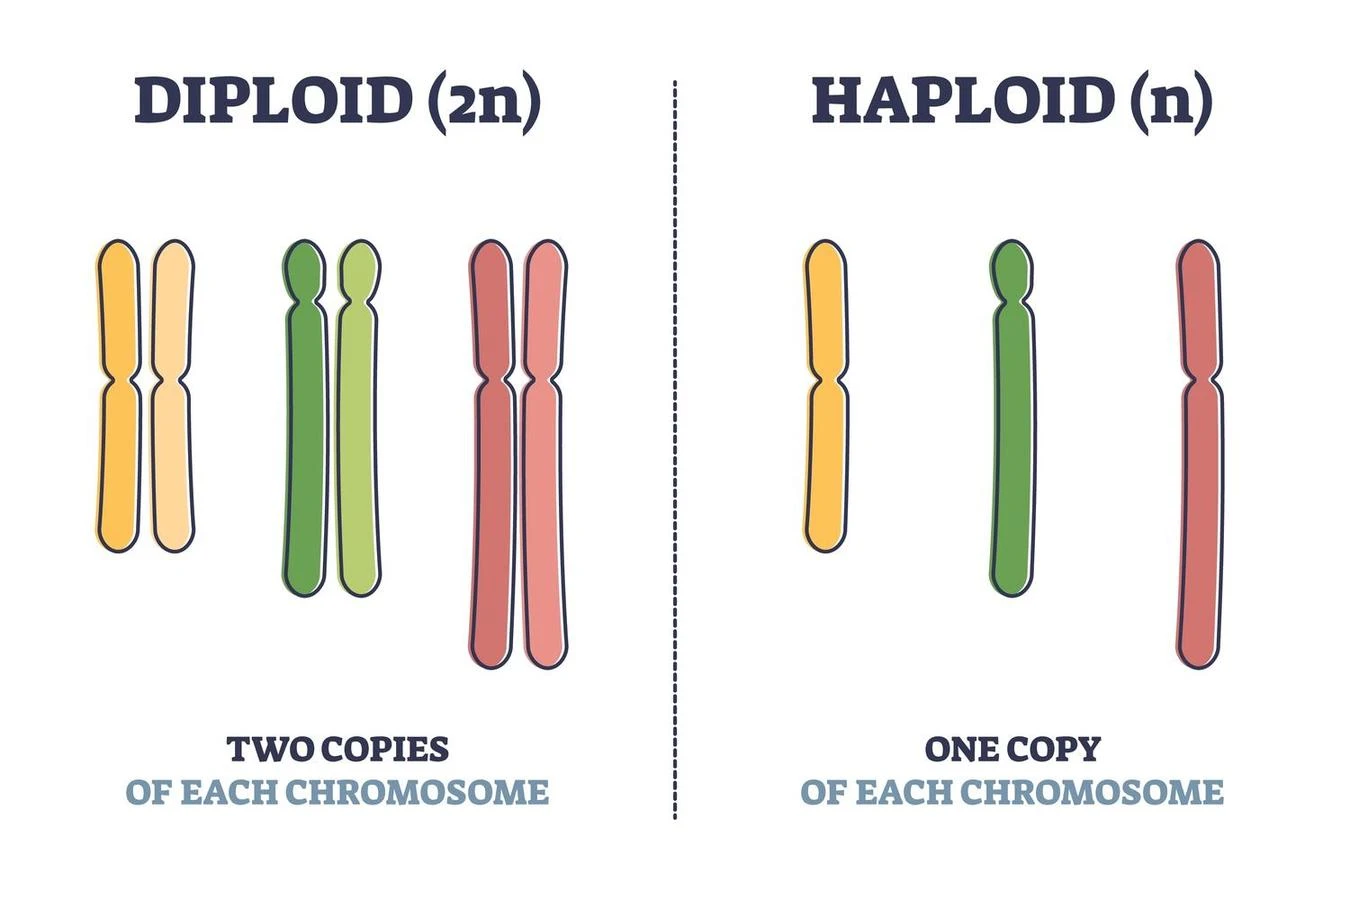 Haploid and Diploid set of chromosome